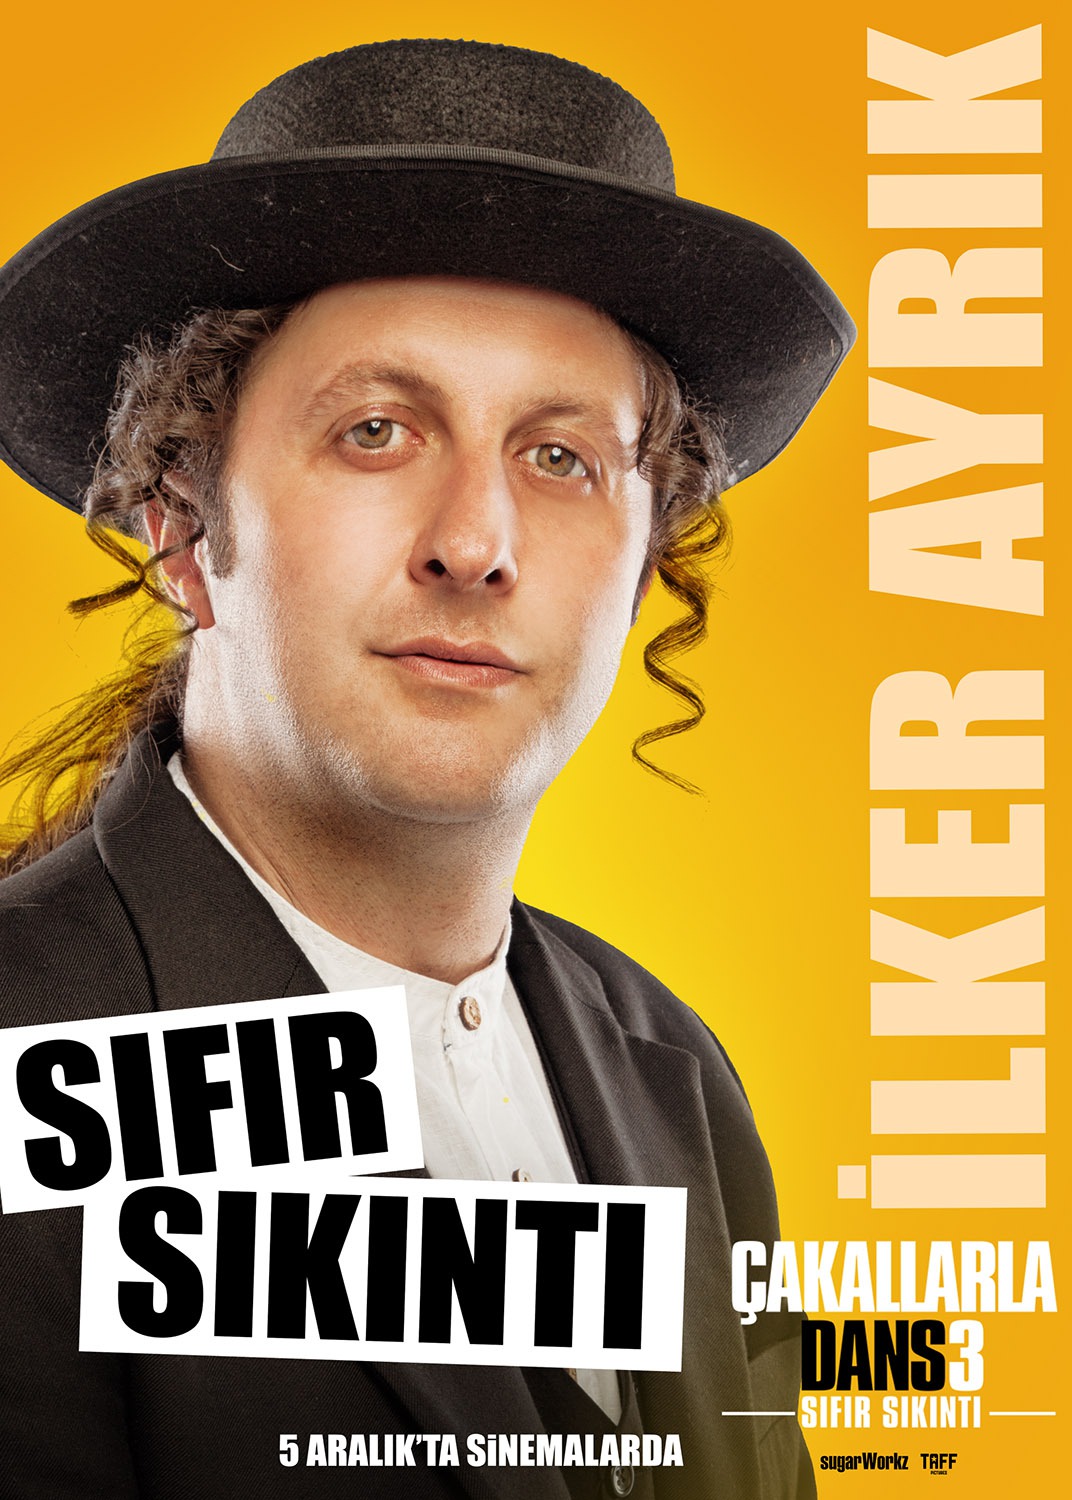 Extra Large Movie Poster Image for Çakallarla Dans 3: Sifir Sikinti (#4 of 9)